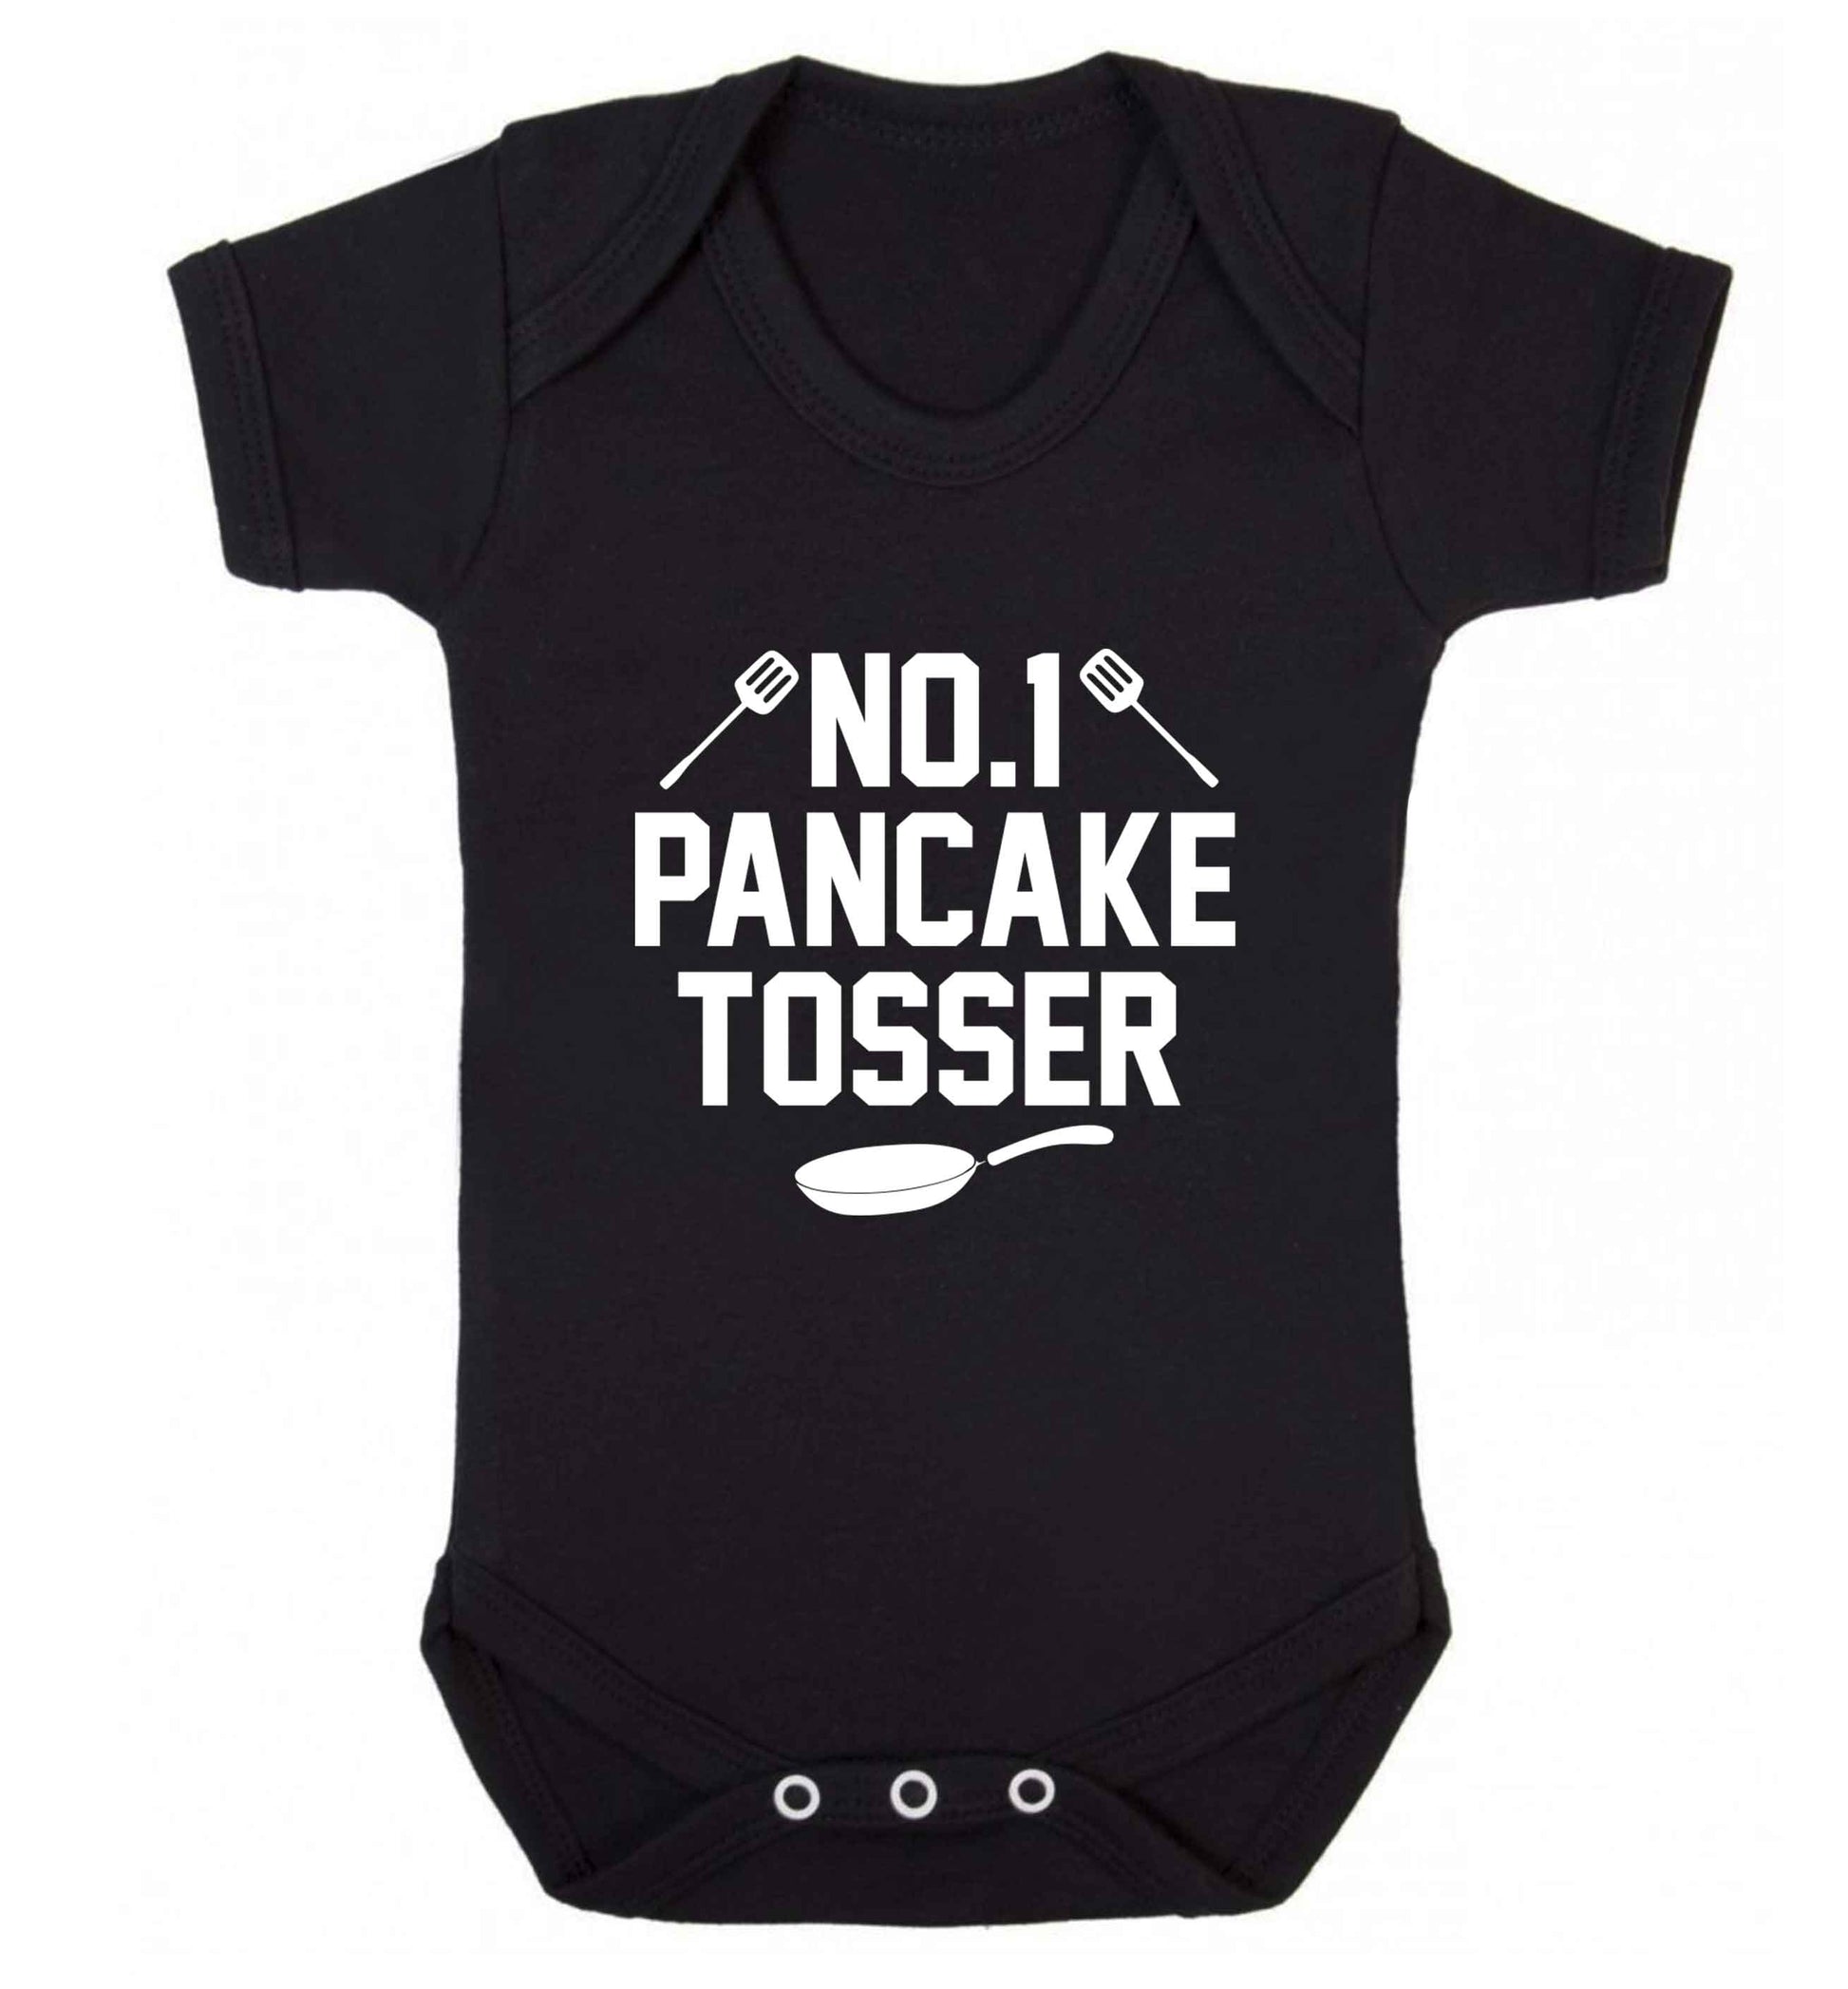 No.1 Pancake tosser baby vest black 18-24 months